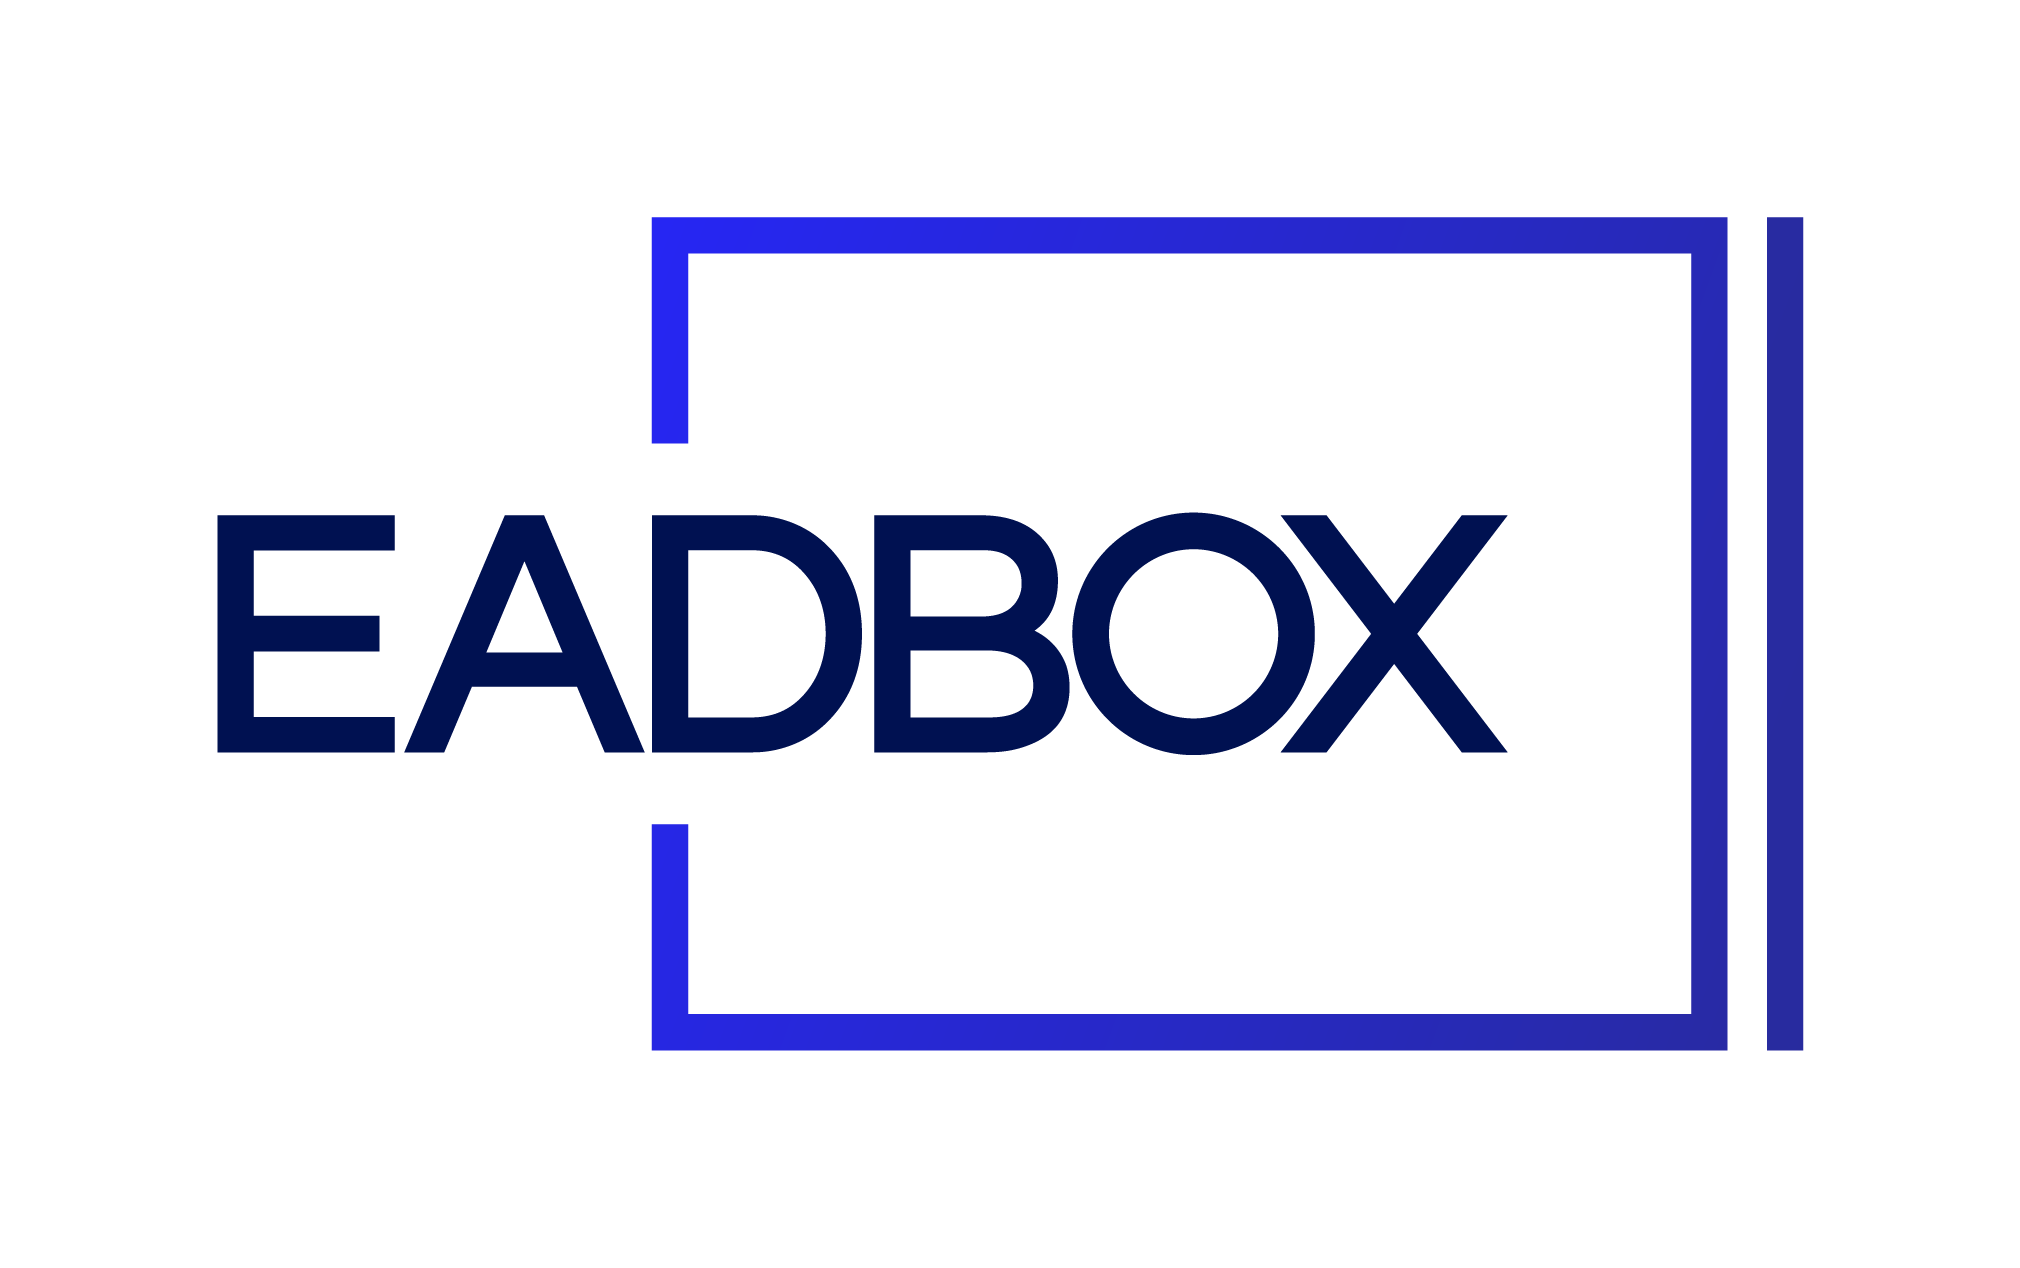 eadbox